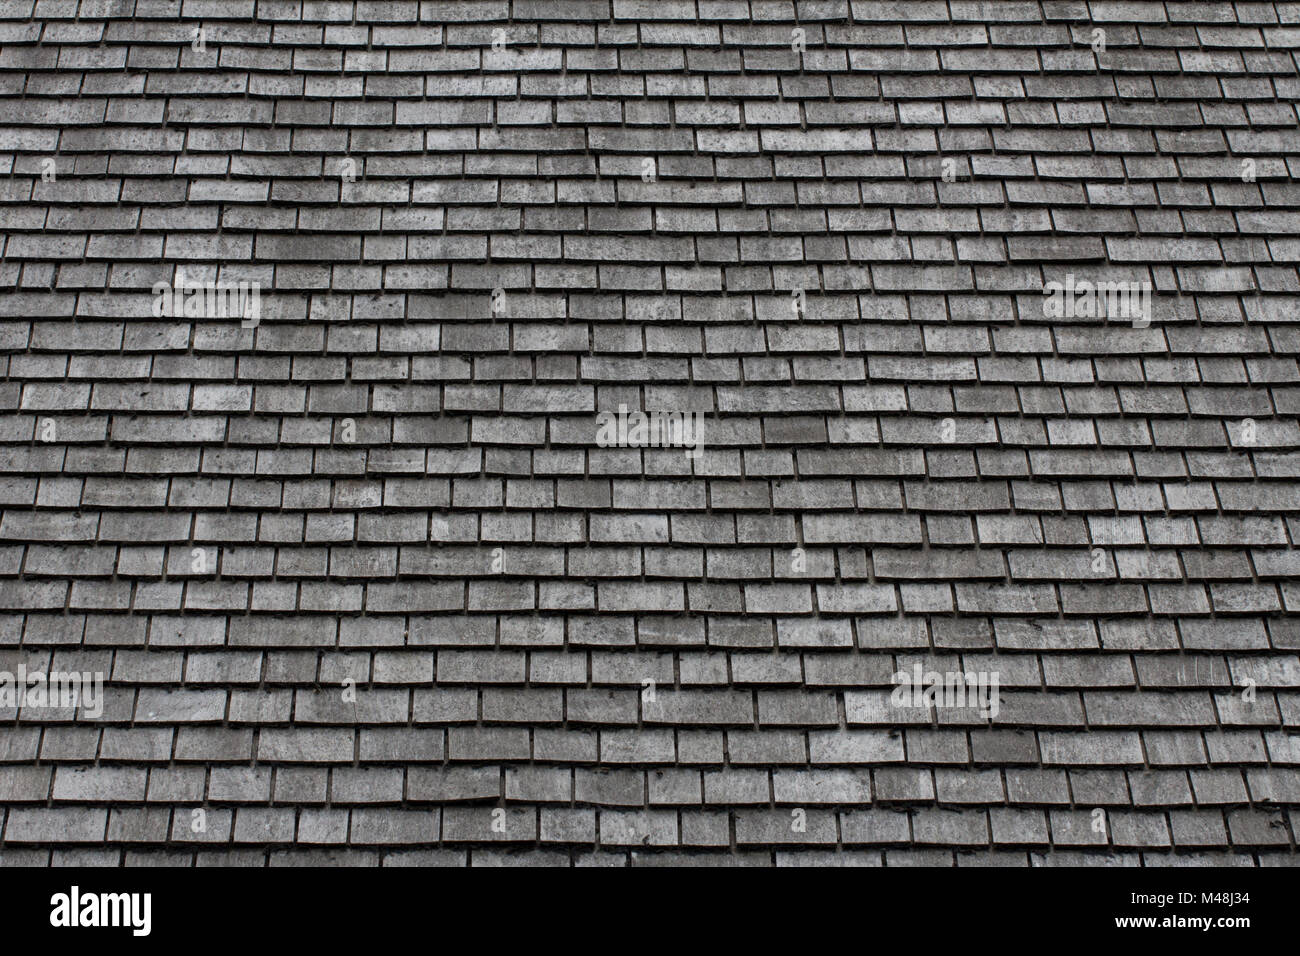 A grey slate roof background image Stock Photo - Alamy